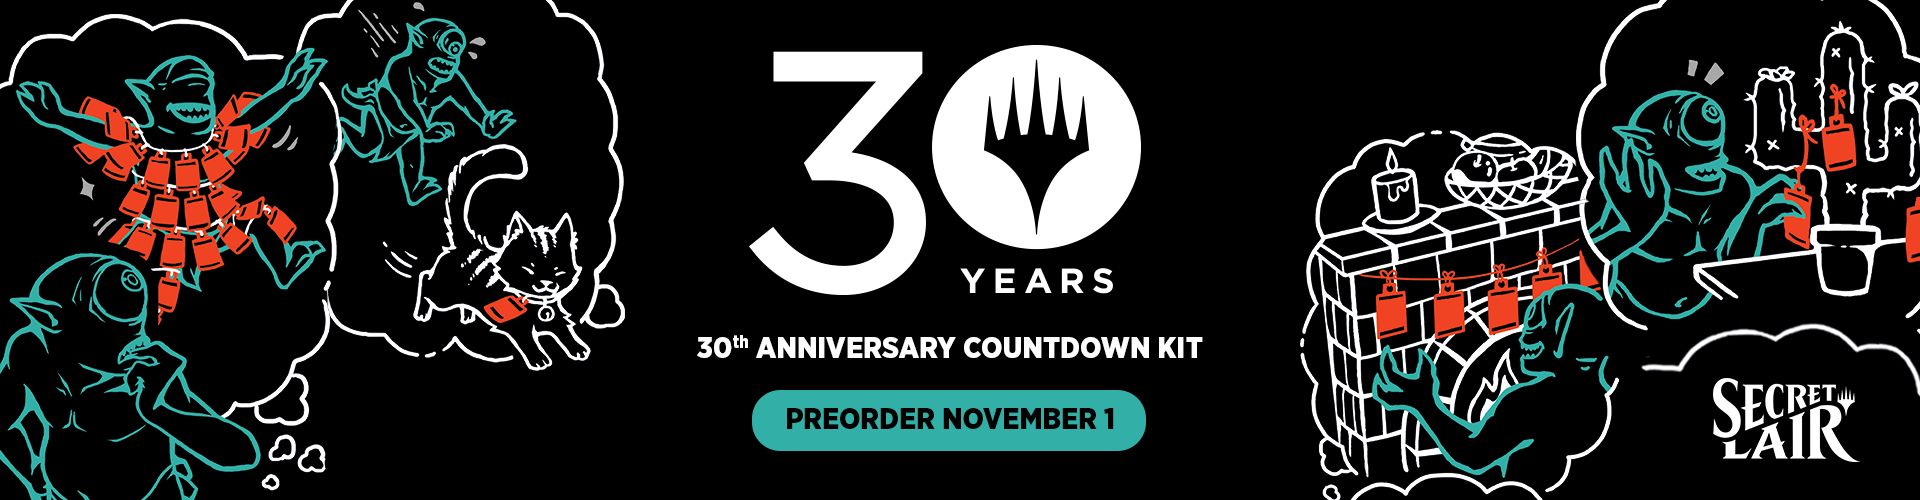 30th Anniversary Countdown Kit | Secret Lair